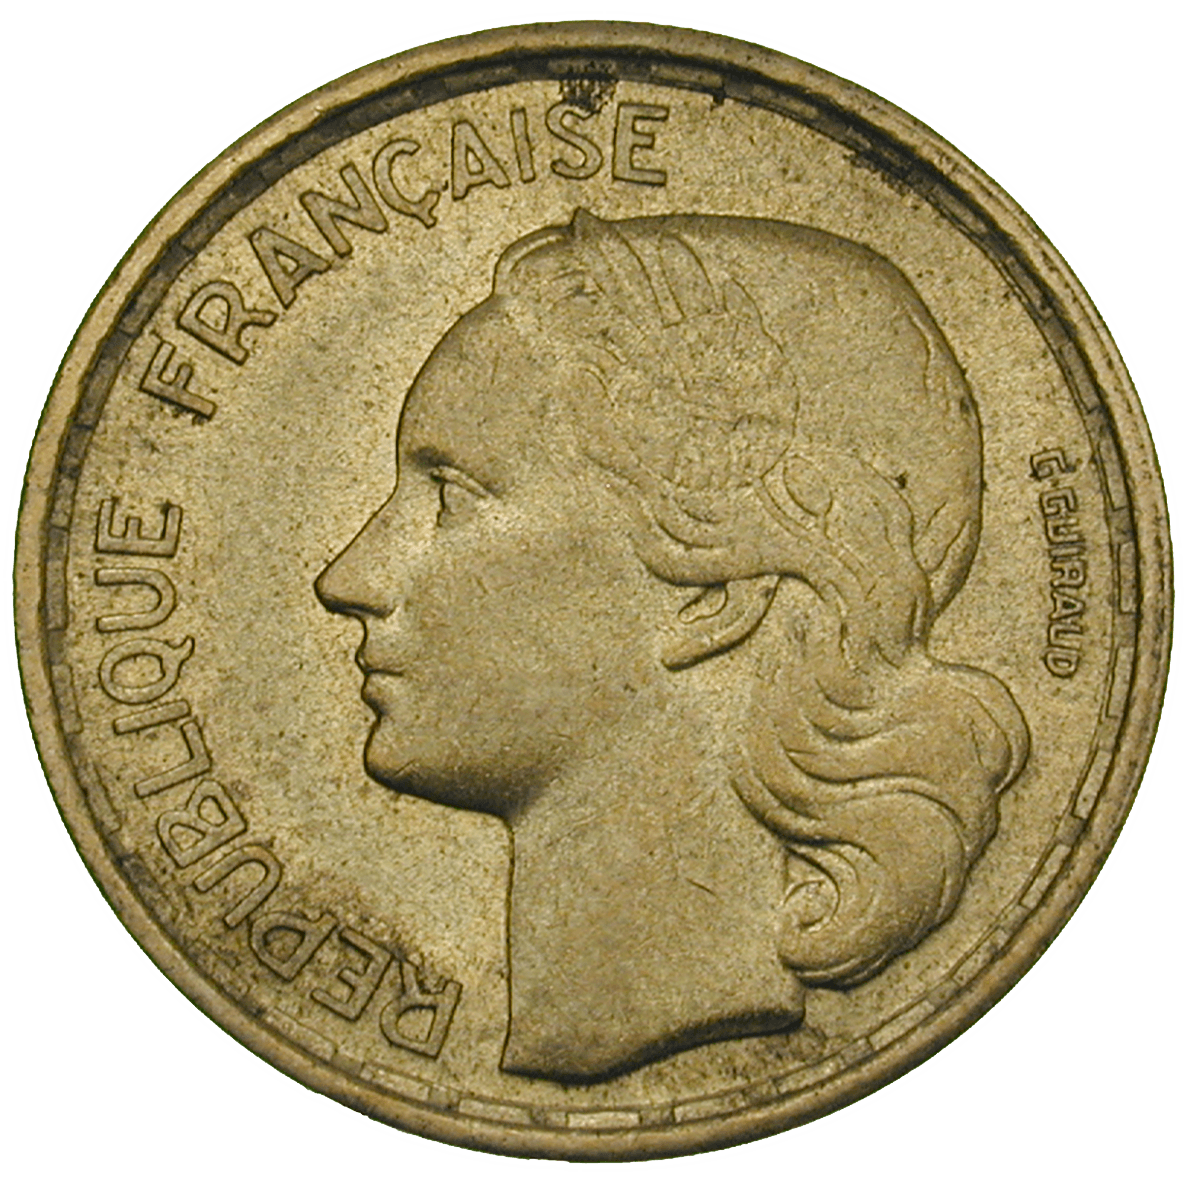 Republic of France, 10 Francs 1952 (obverse)